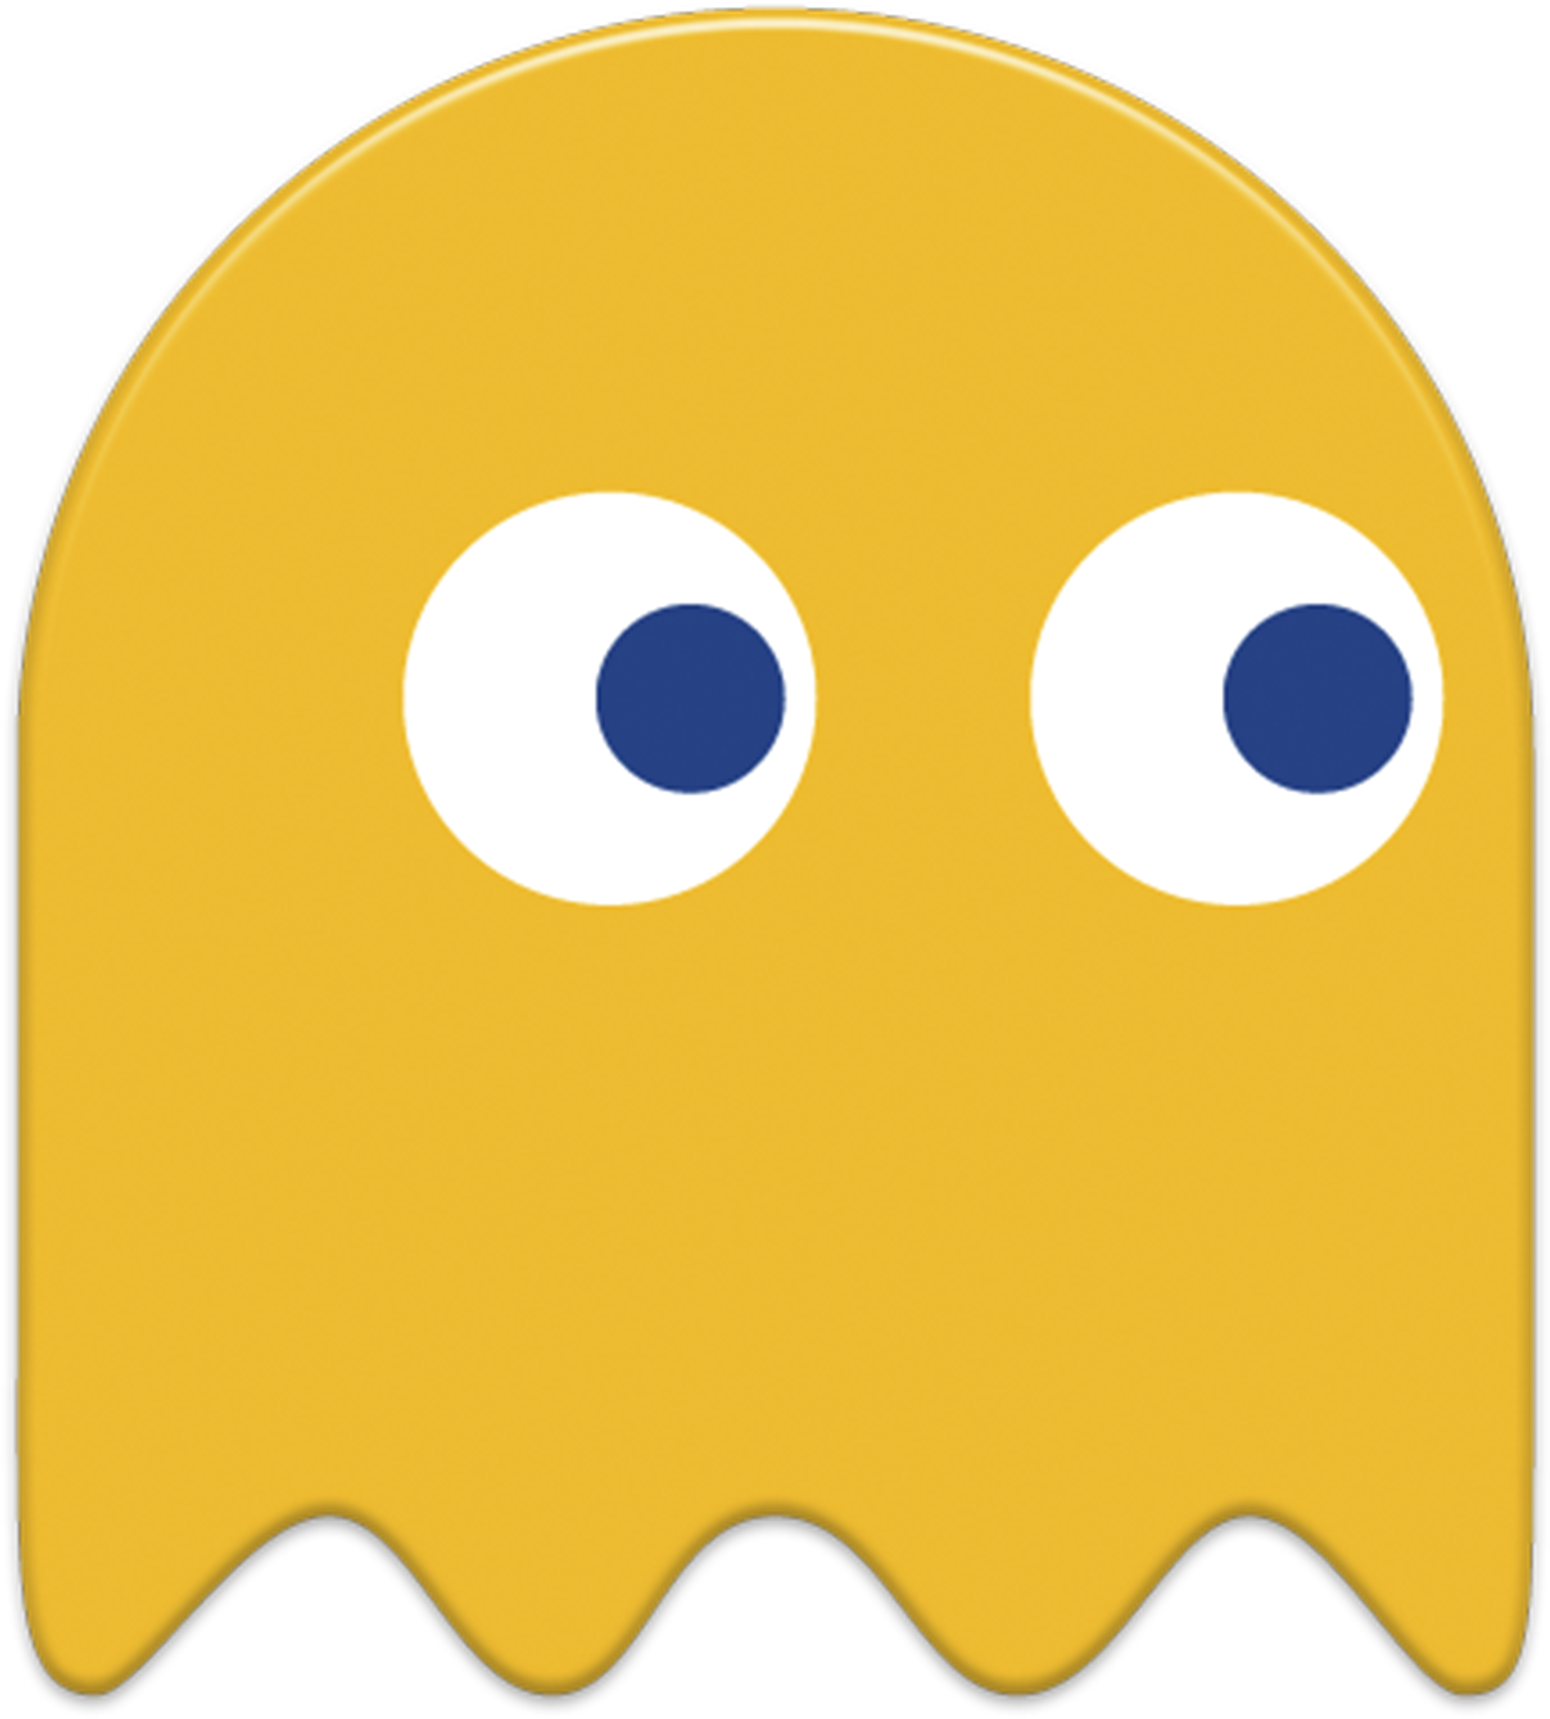 Clyde Fantasma De Pac-man - Pac-man (1681x1792)